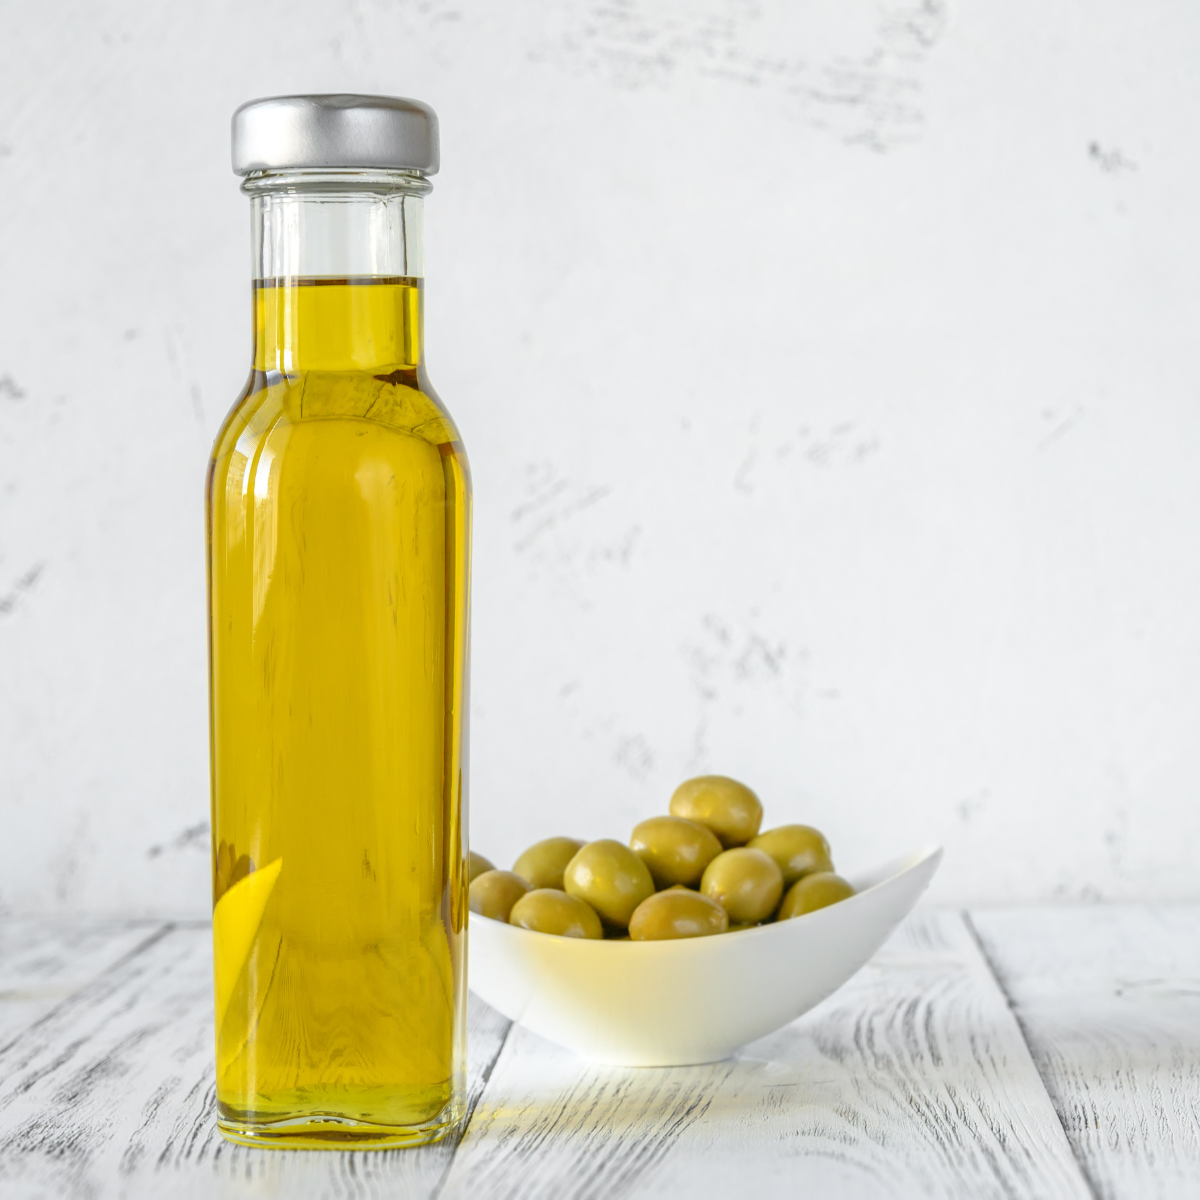 Bottle of olive oil with green olives